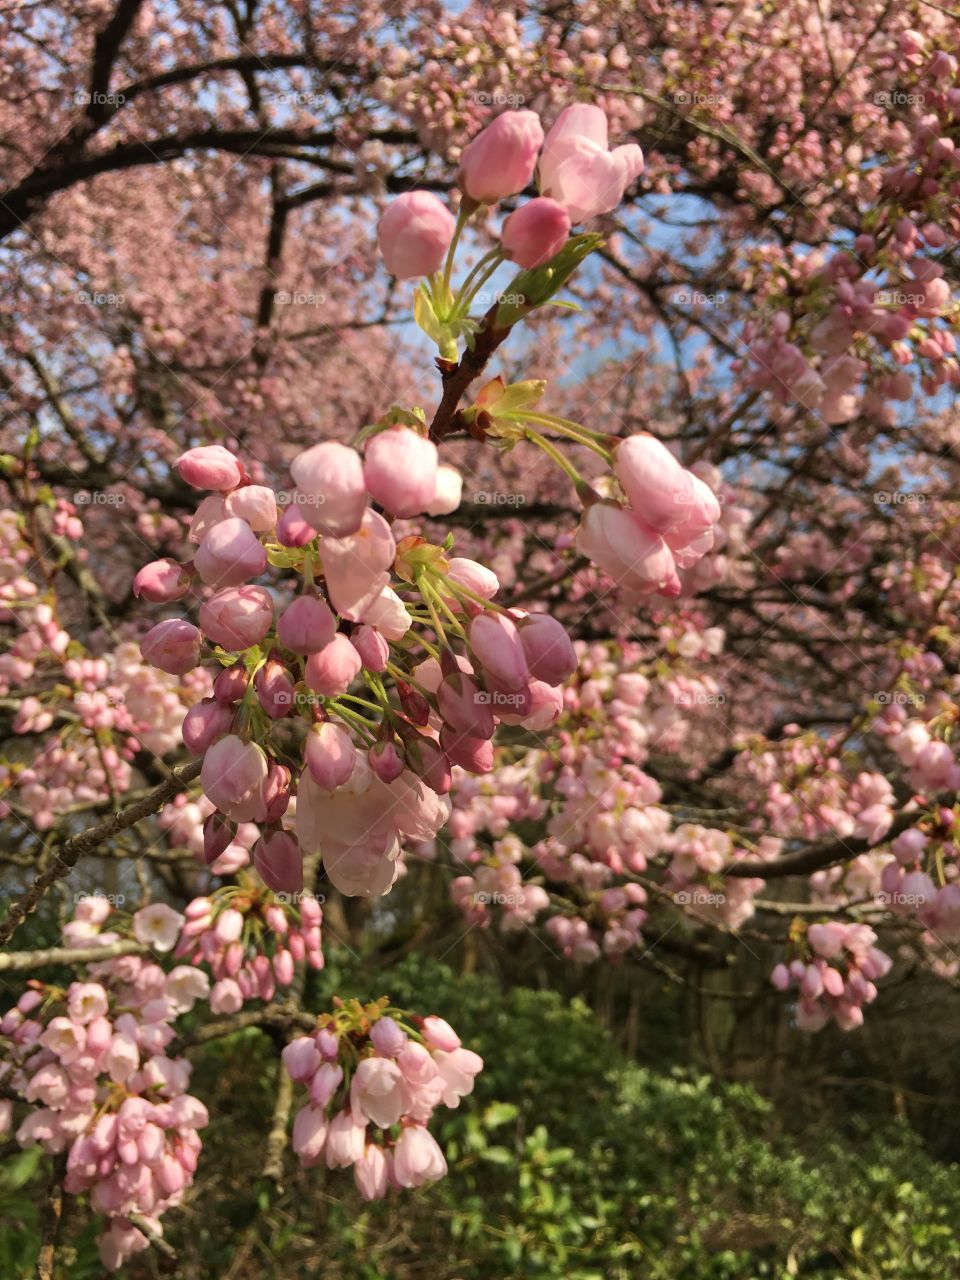 Cherry Blossom Festival Vancouver 2017